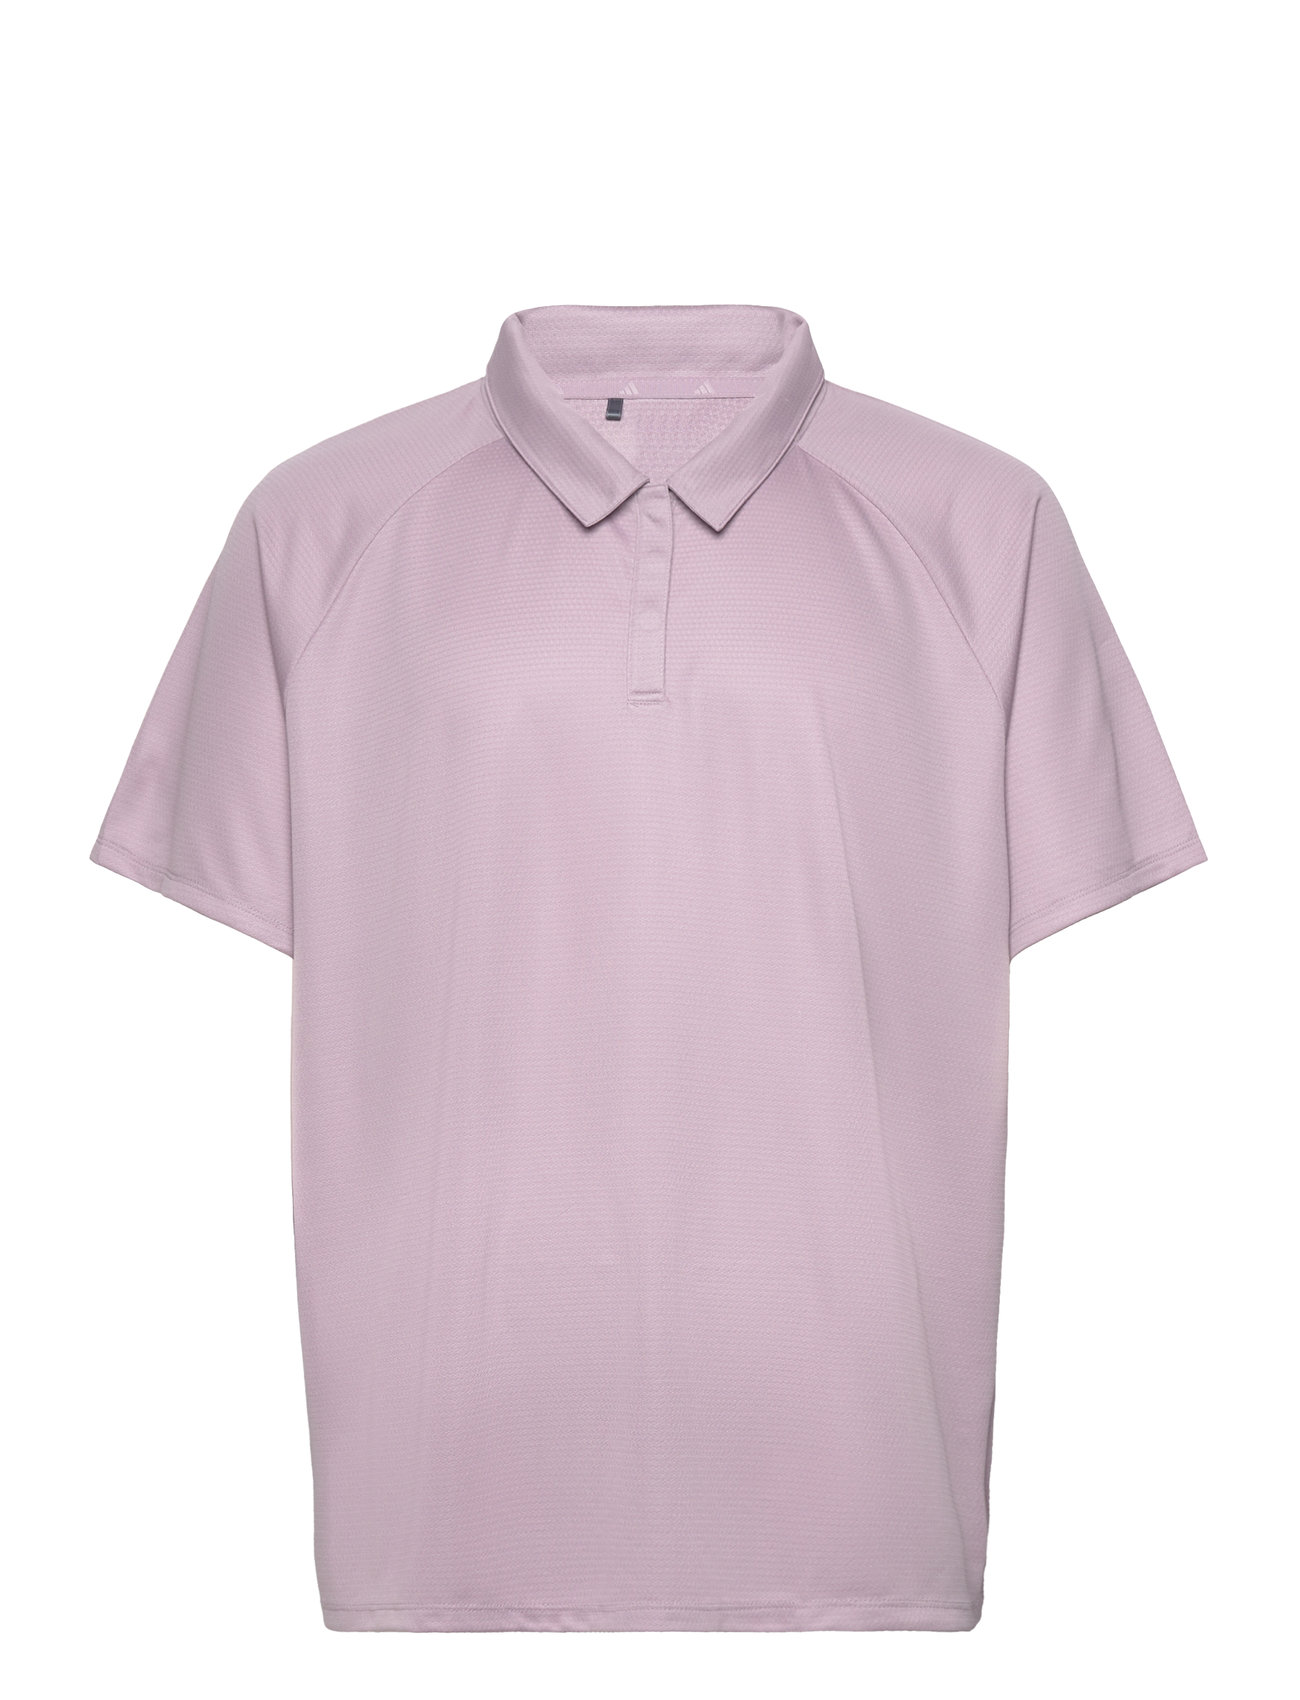 W Ult C H.rdy P Sport T-shirts & Tops Polos Purple Adidas Golf